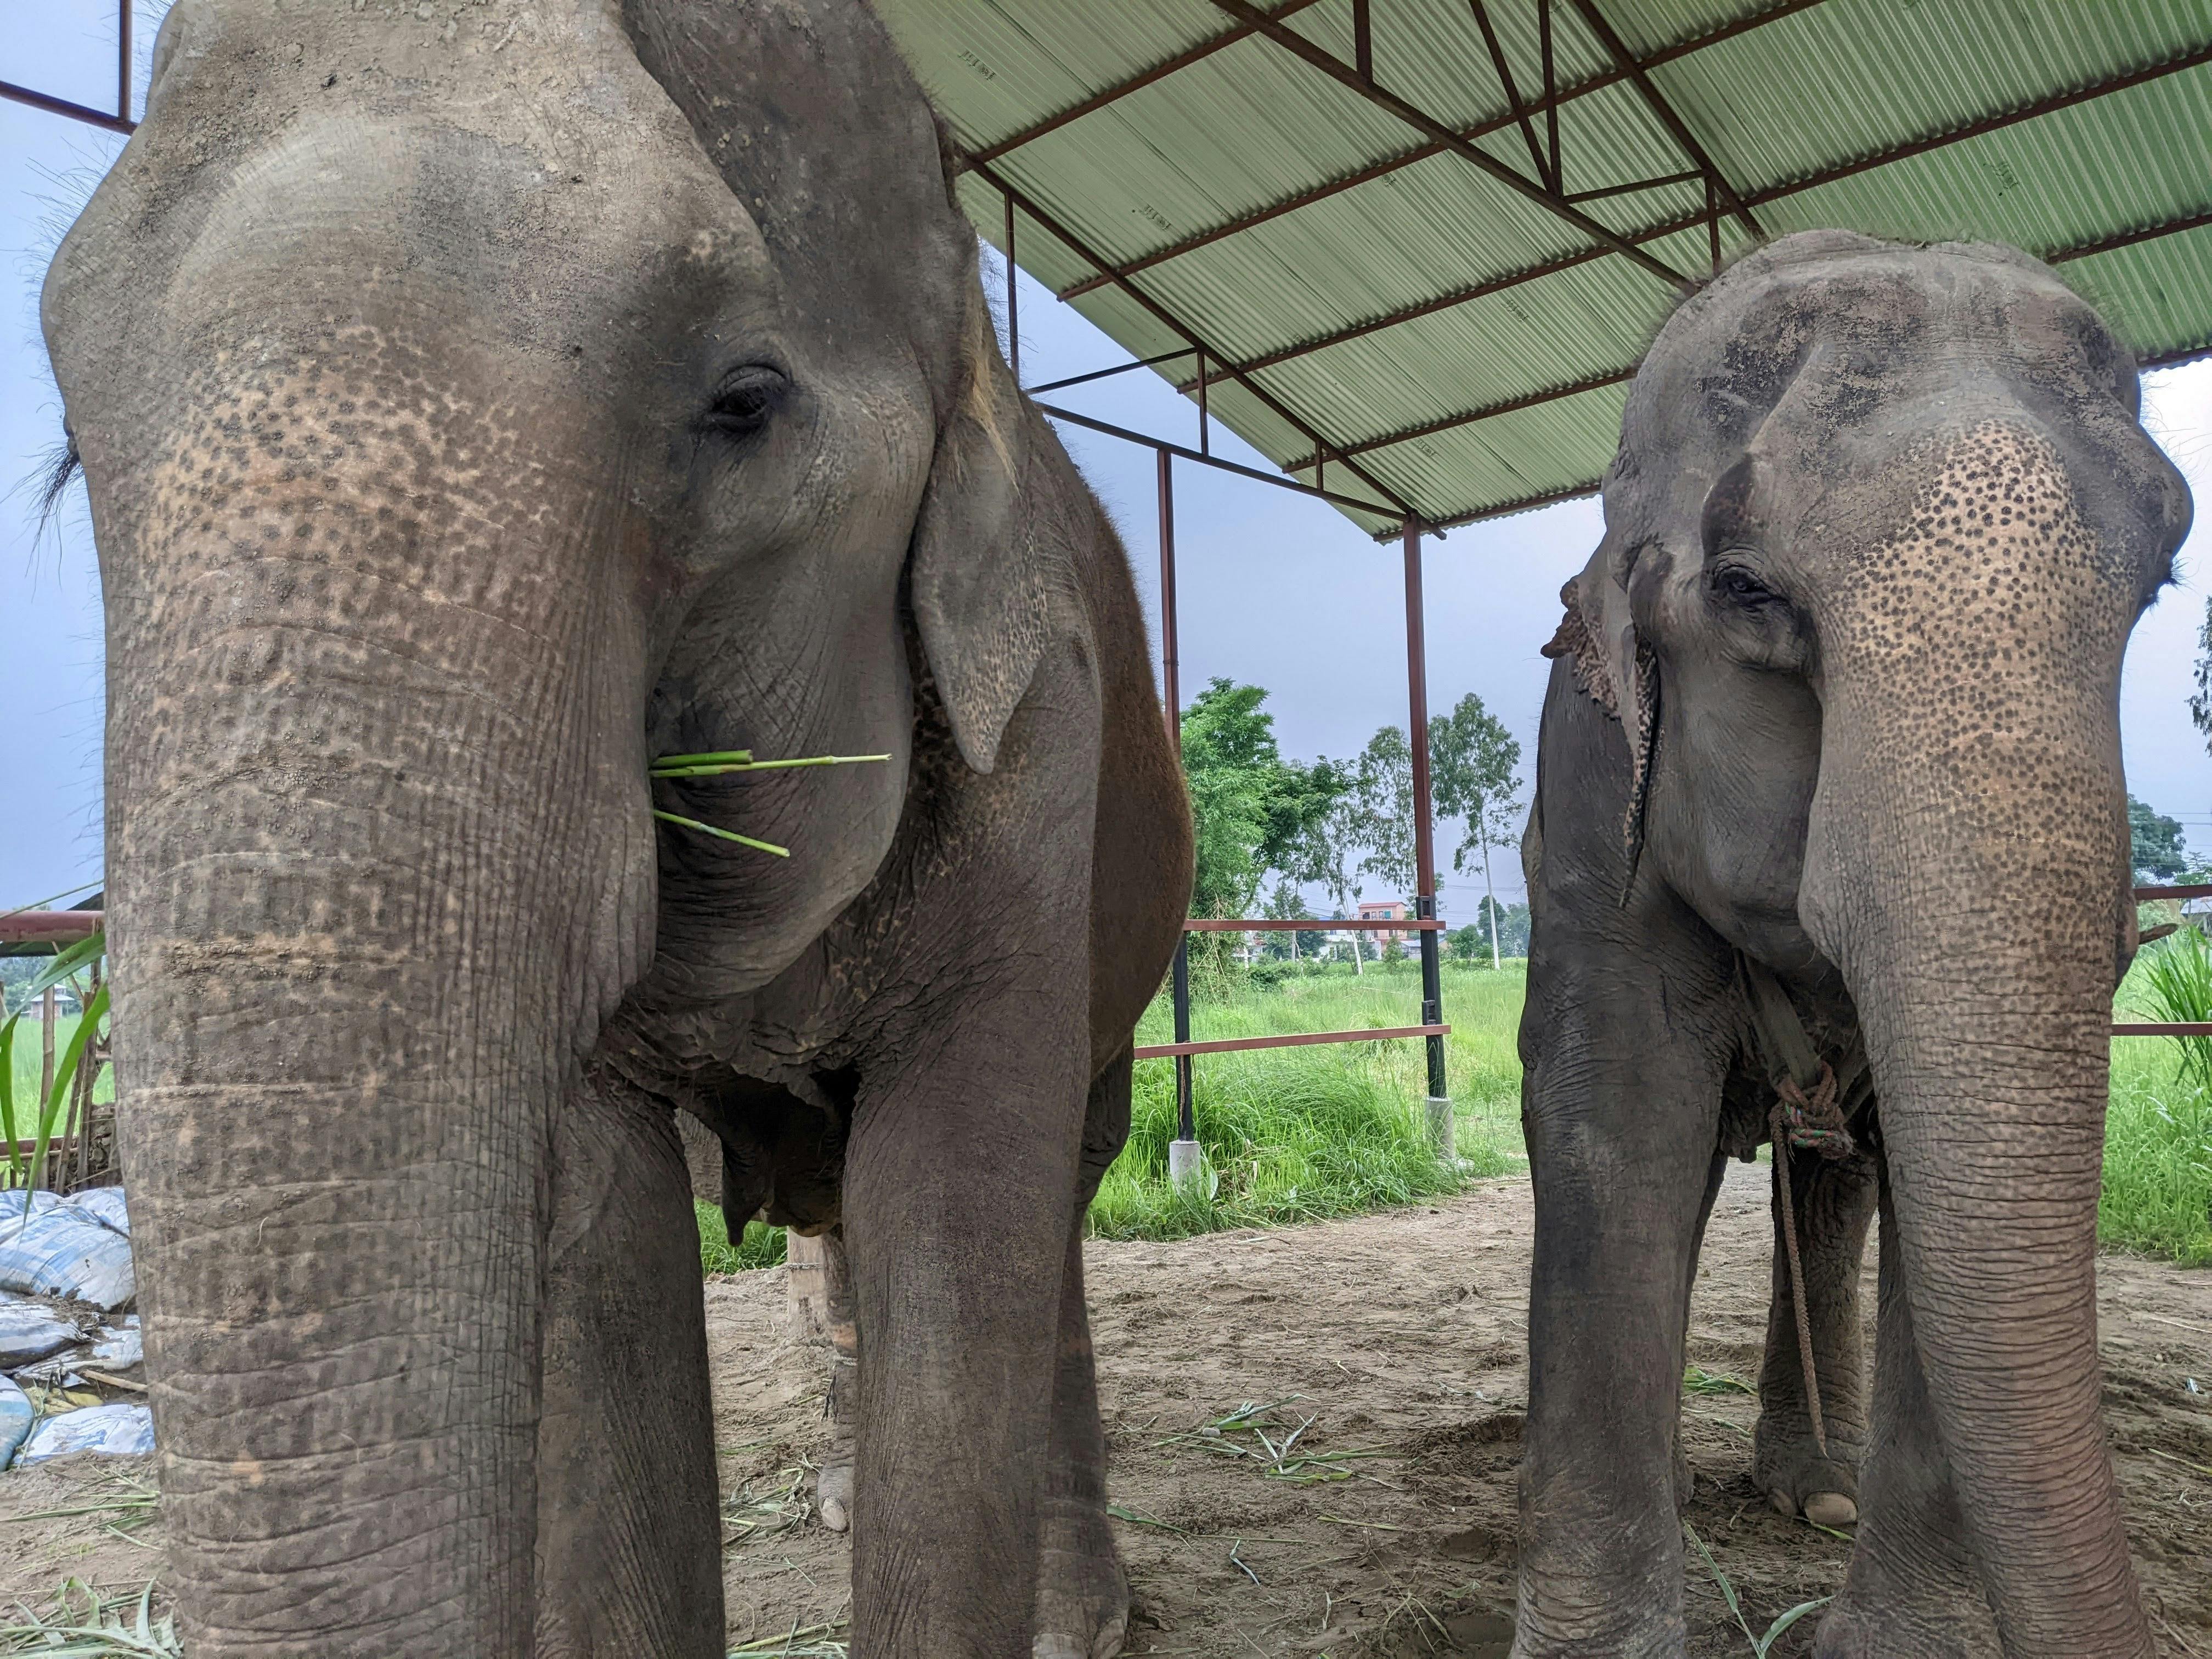 Elephant Conservation Volunteer Program in Nepal